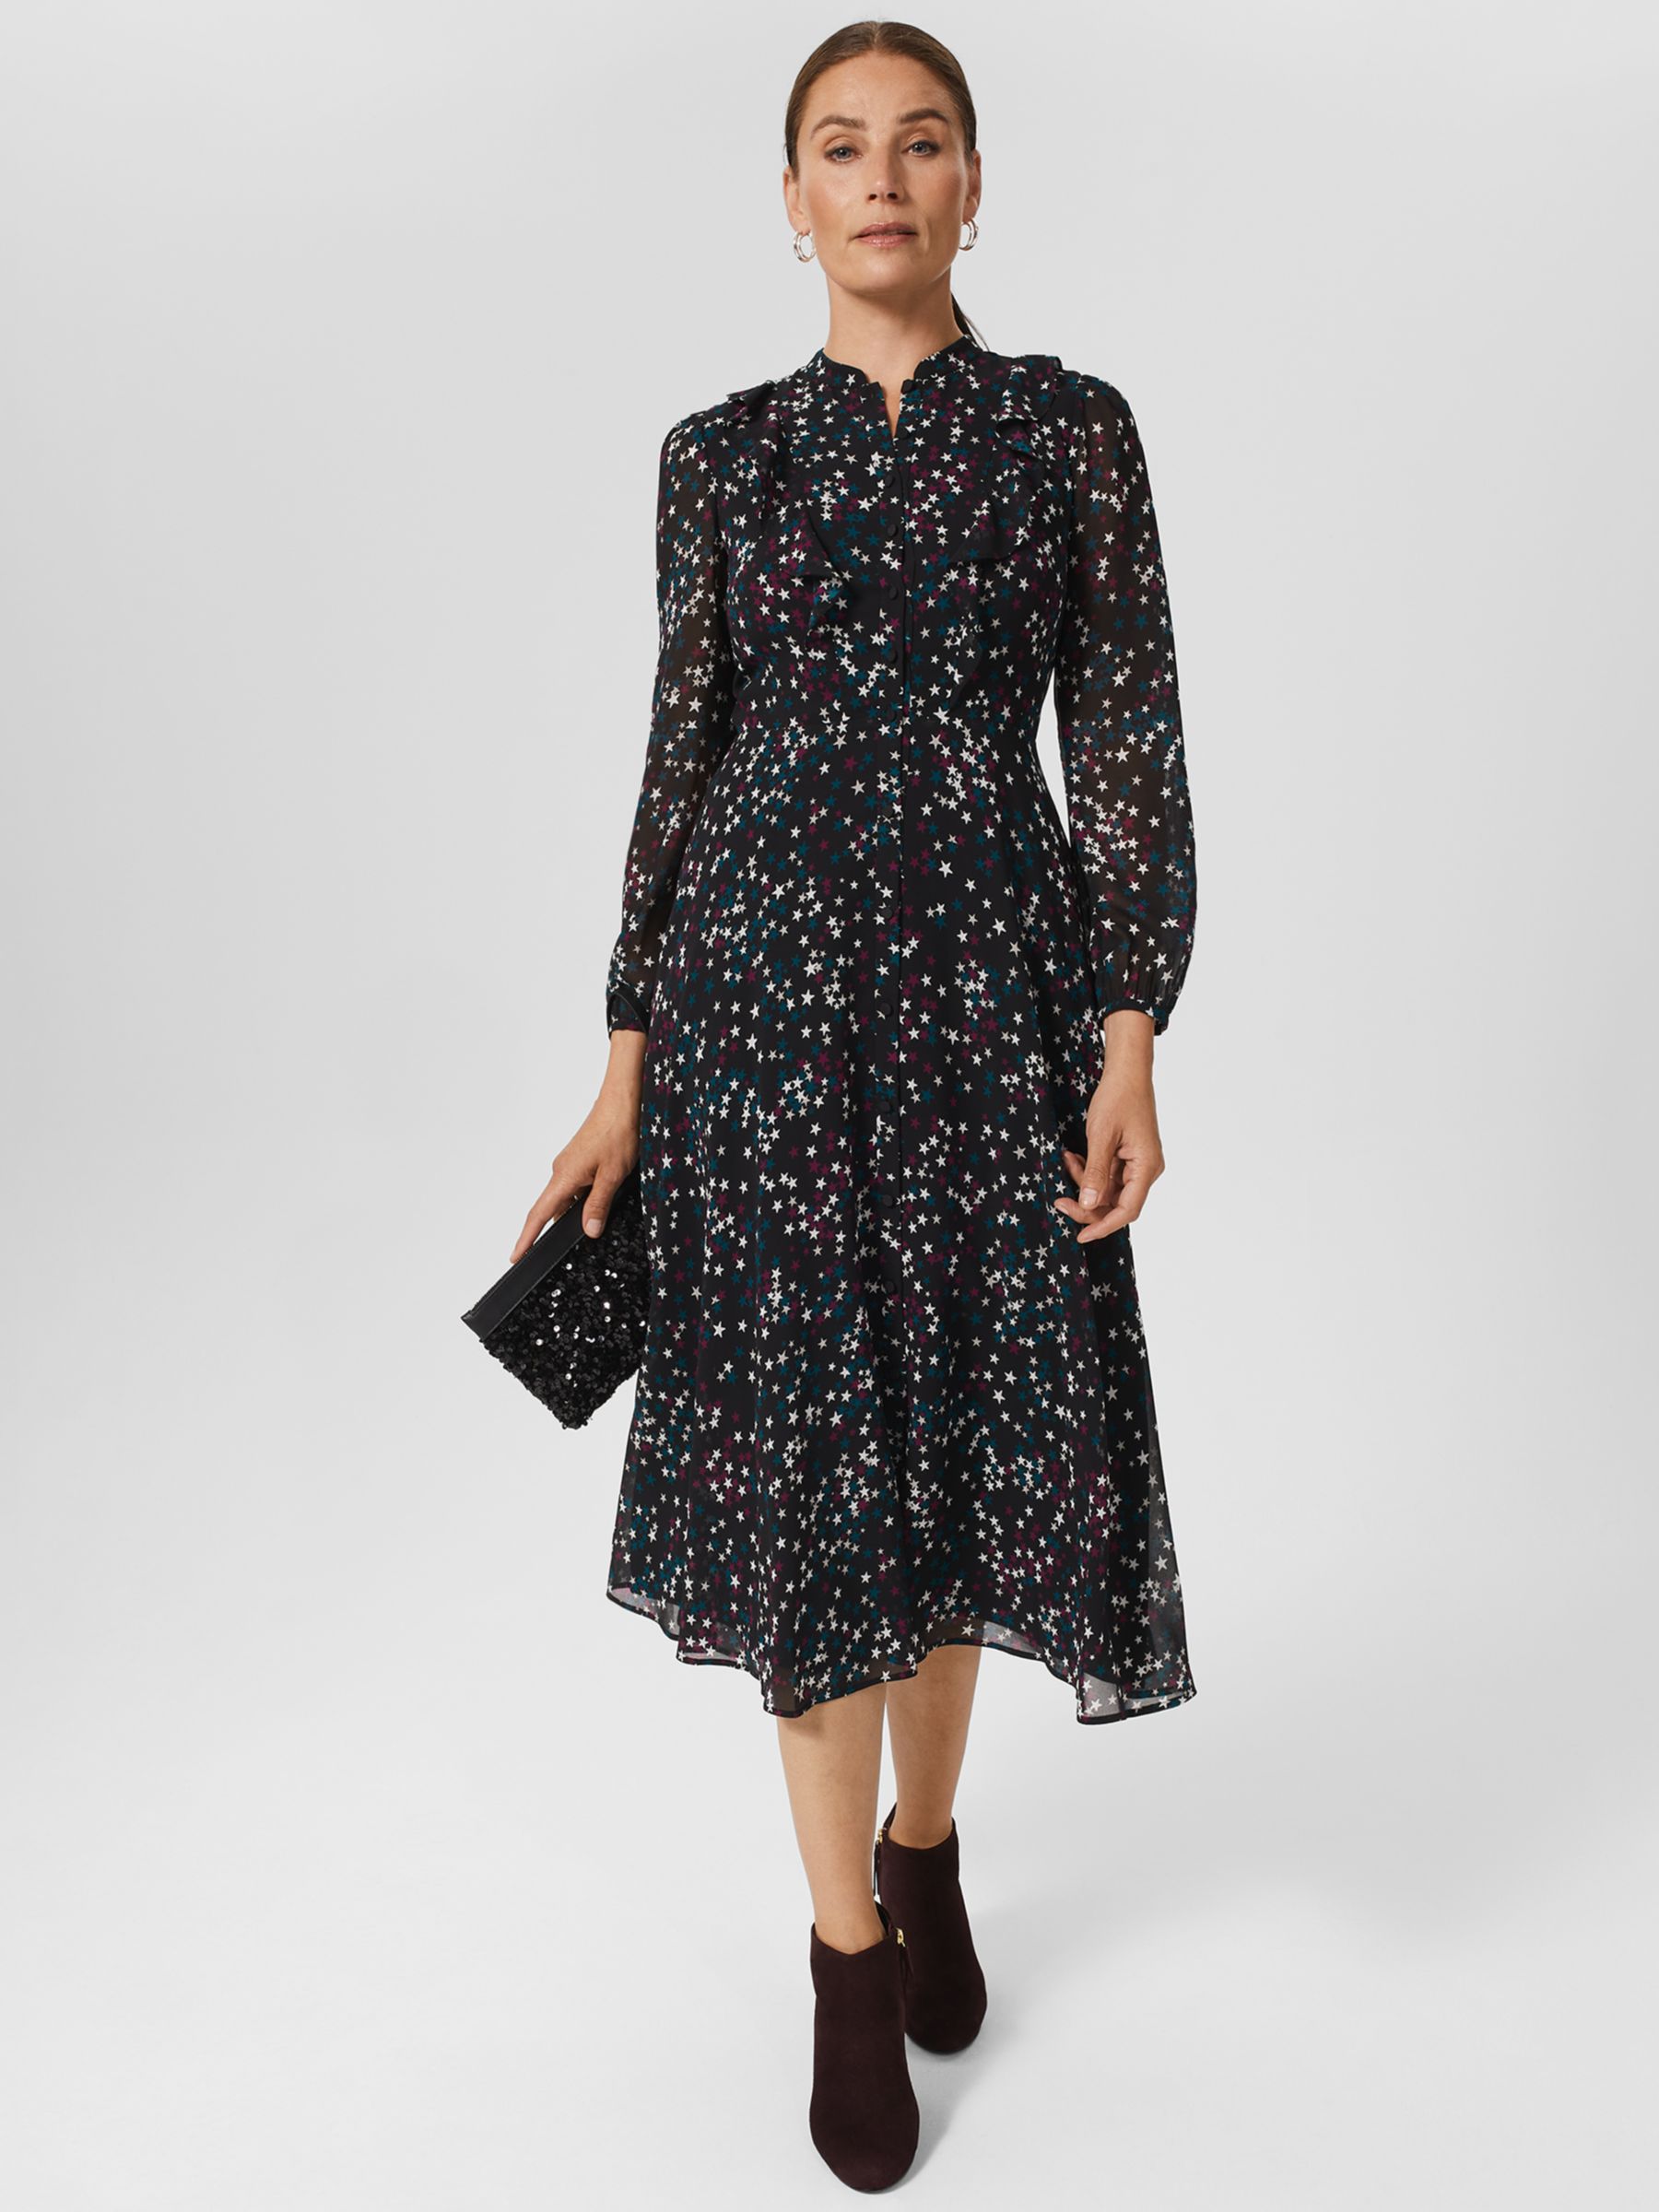 Hobbs Erin Star Print Midi Dress, Black/Multi at John Lewis & Partners